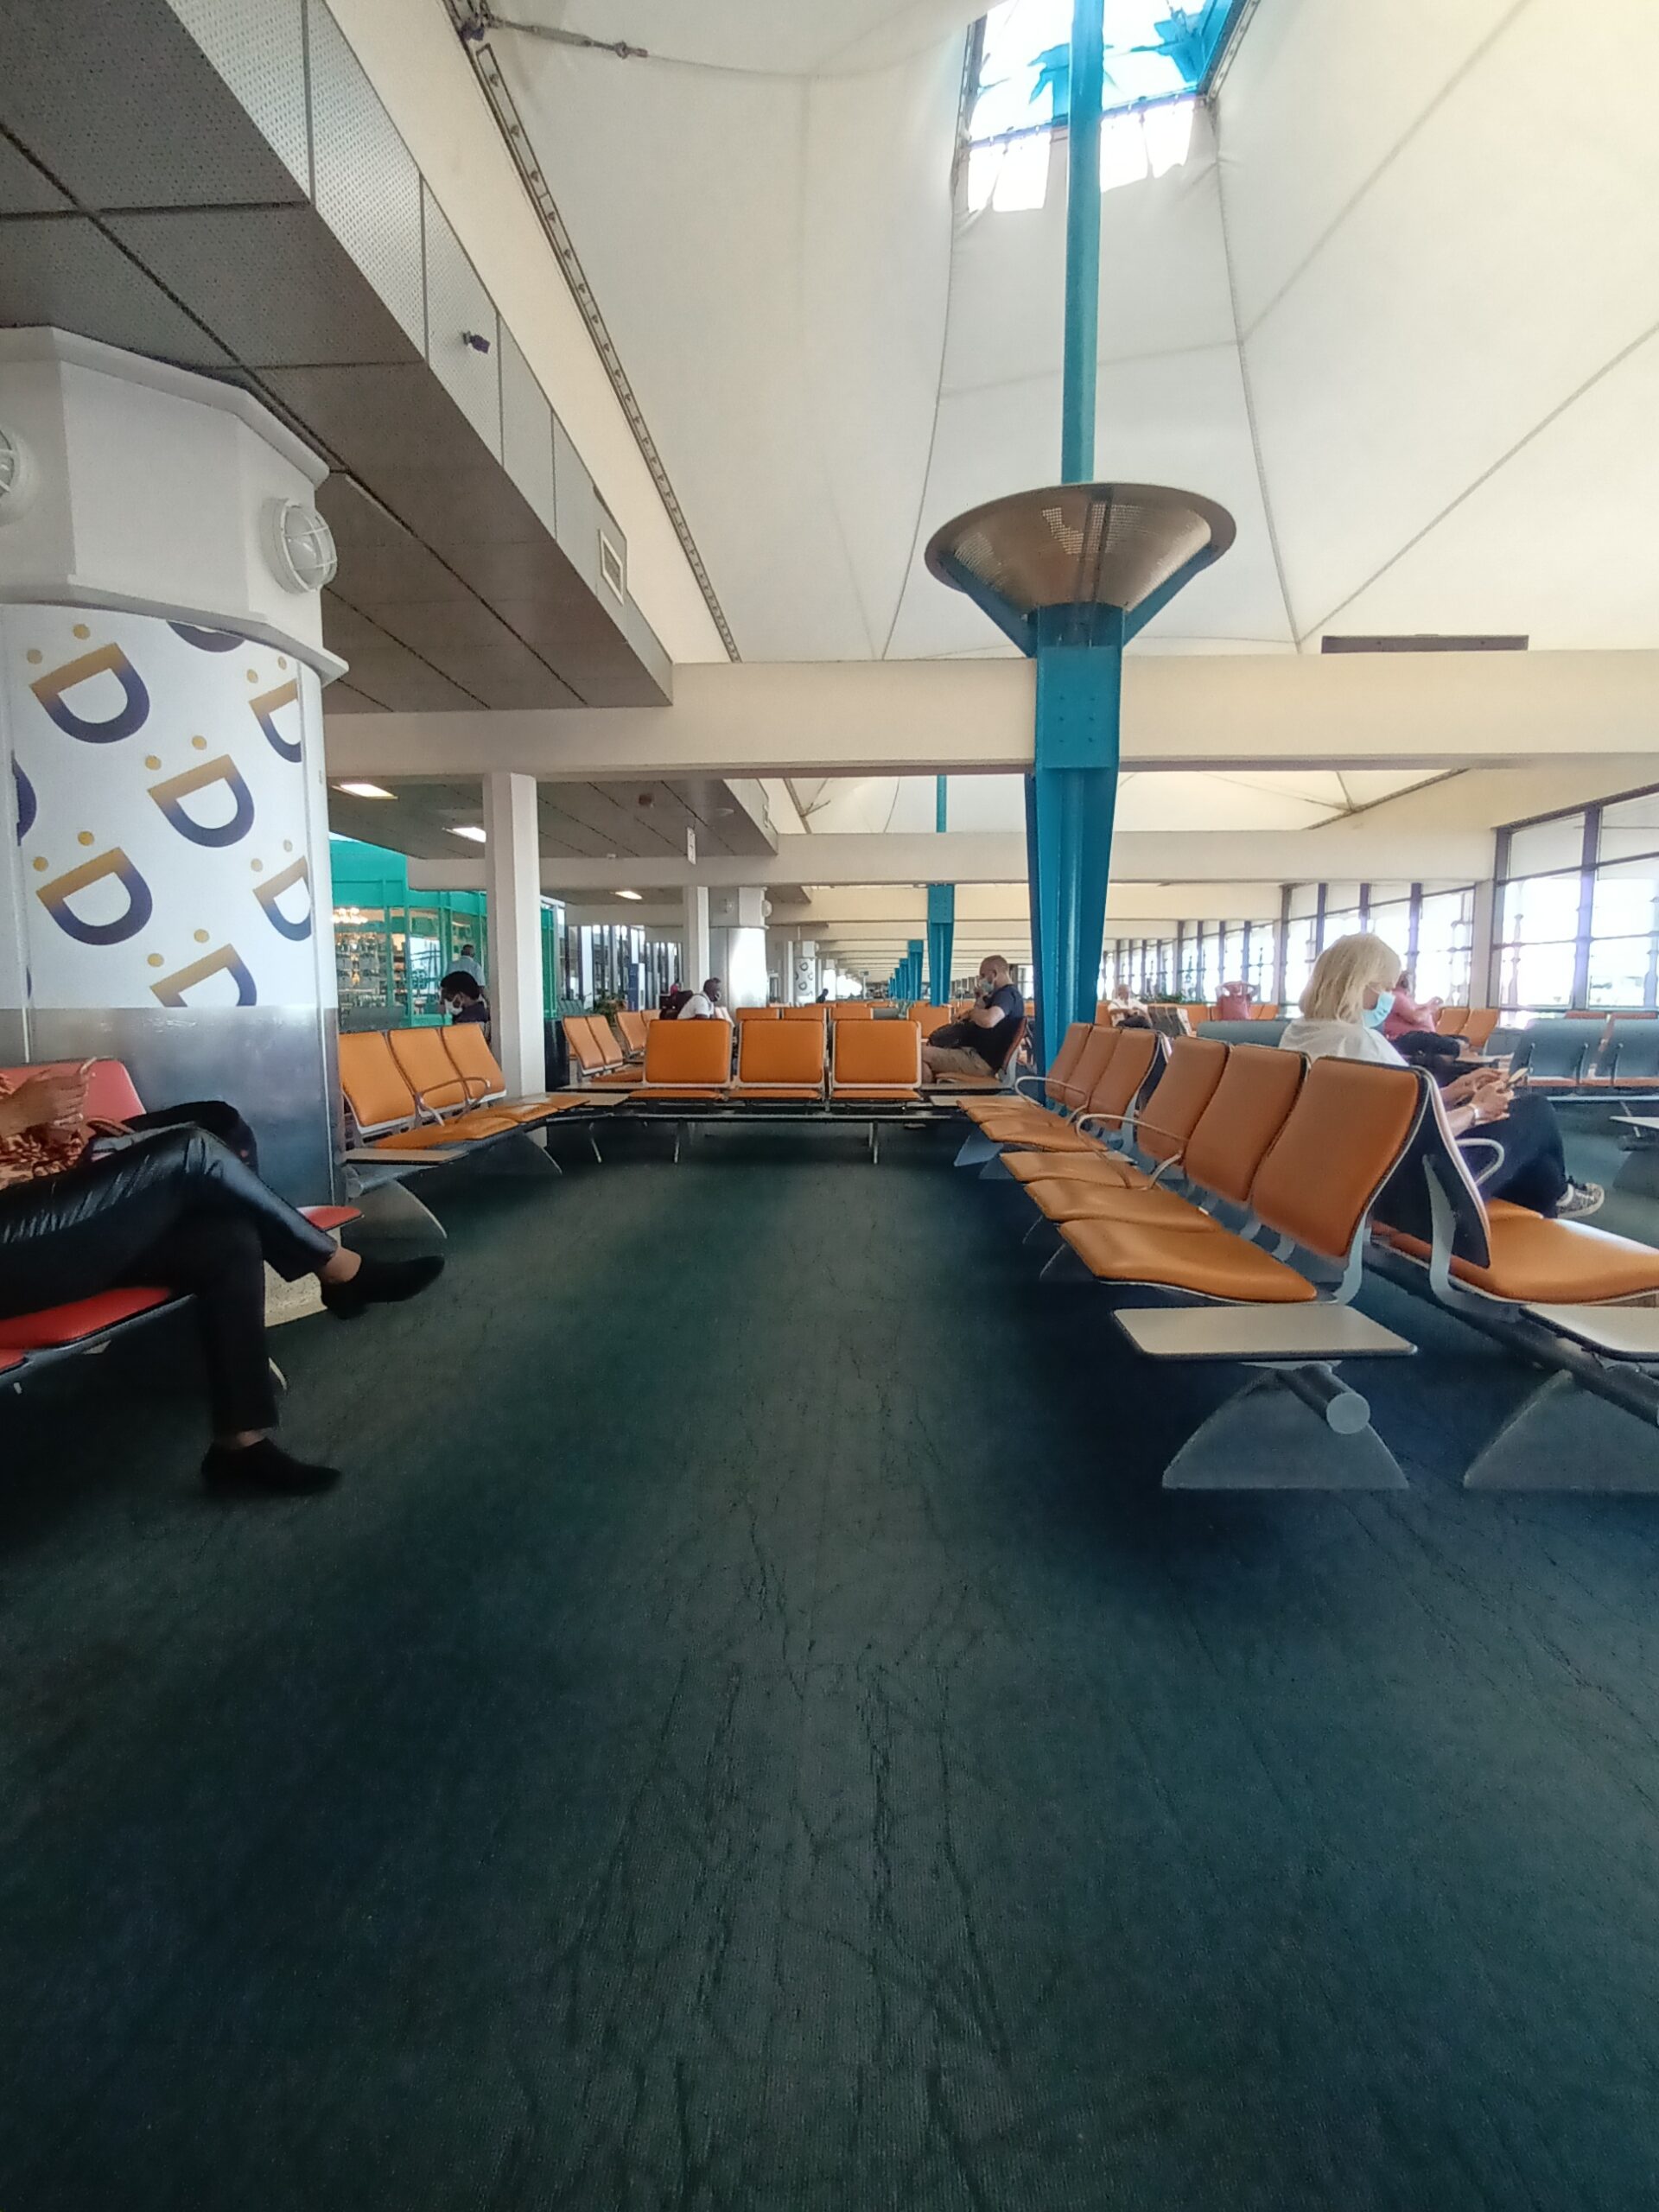 Waiting area at Barbados airport